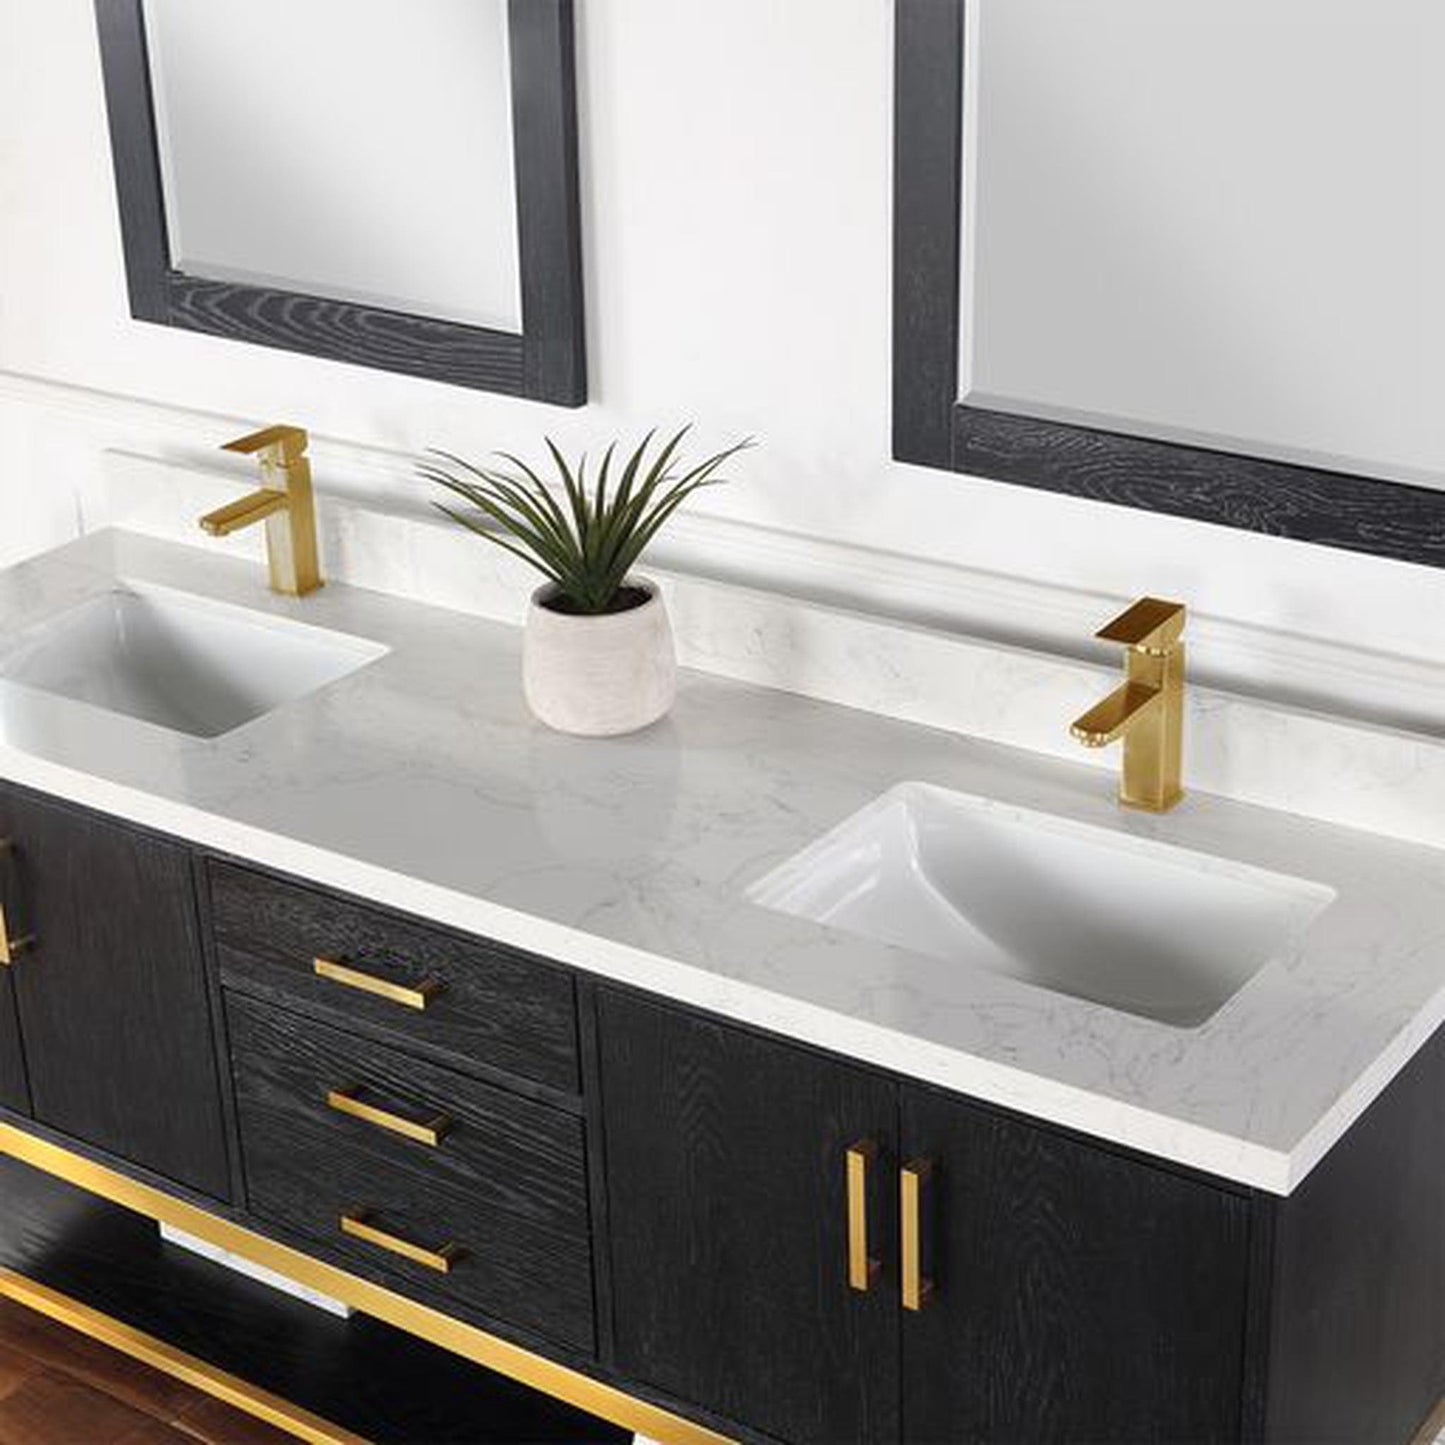 Altair Wildy 72" Black Oak Freestanding Double Bathroom Vanity Set With Mirror, Stylish Composite Grain White Stone Top, Two Rectangular Undermount Ceramic Sinks, Overflow, and Backsplash